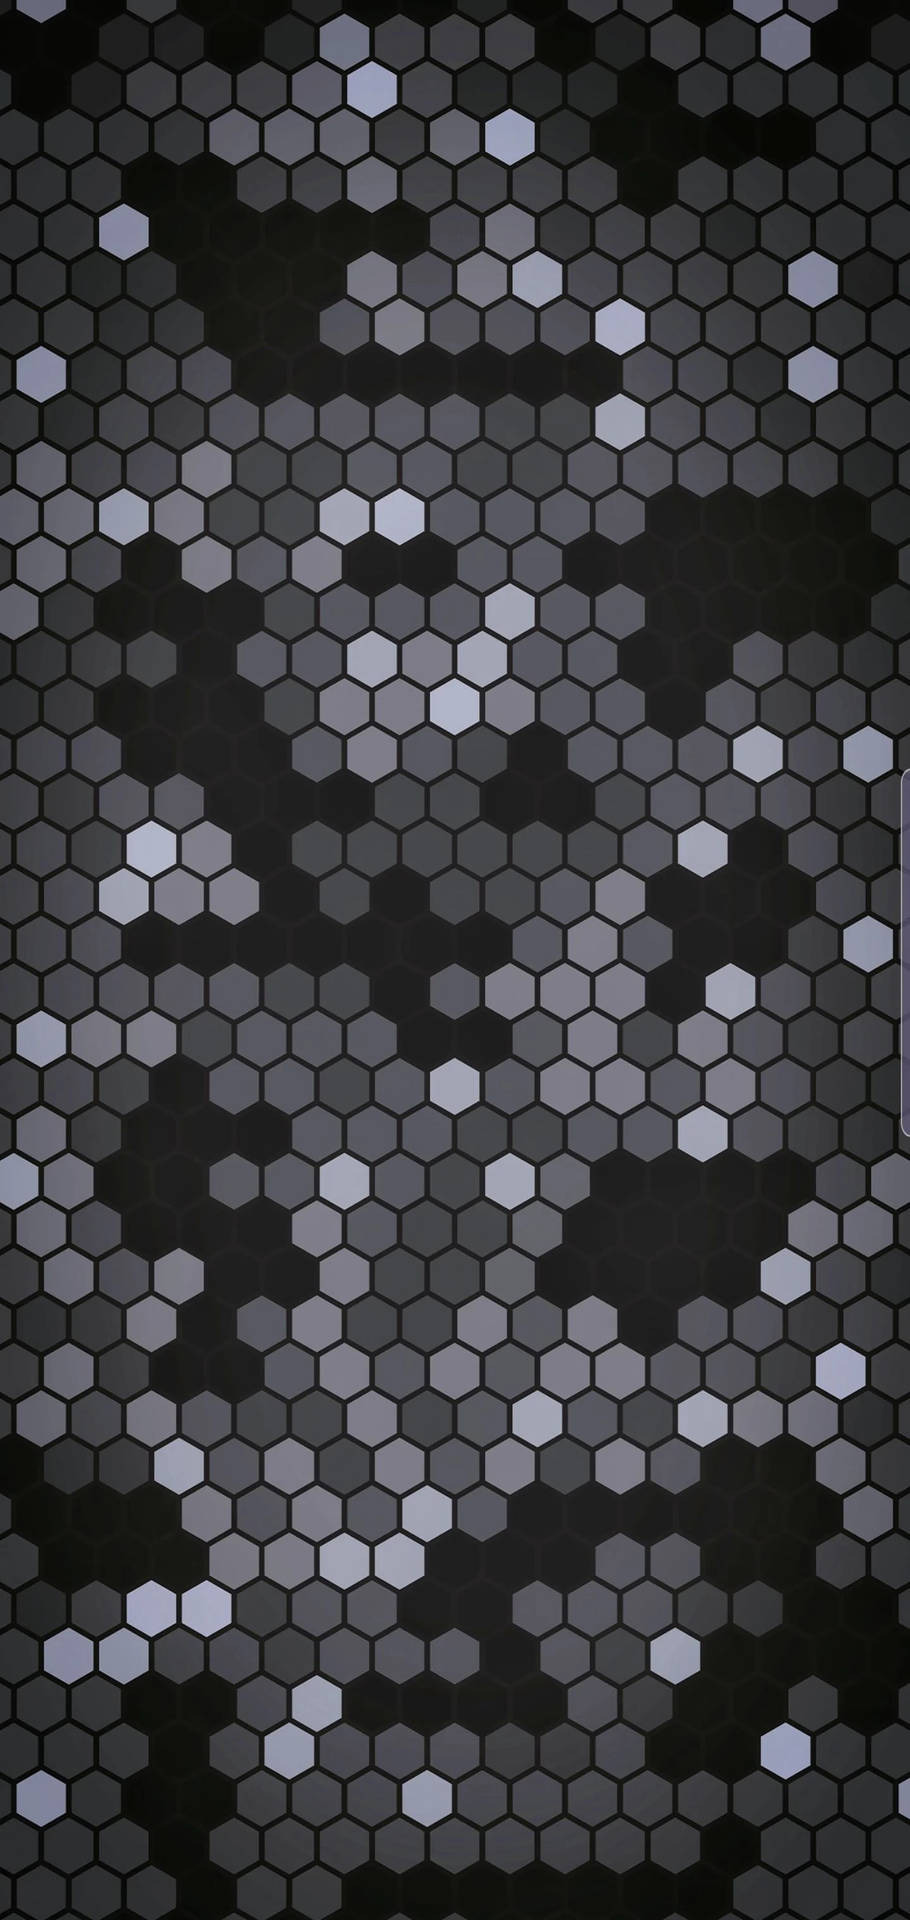 Polygon Patterns Punch Hole 4k